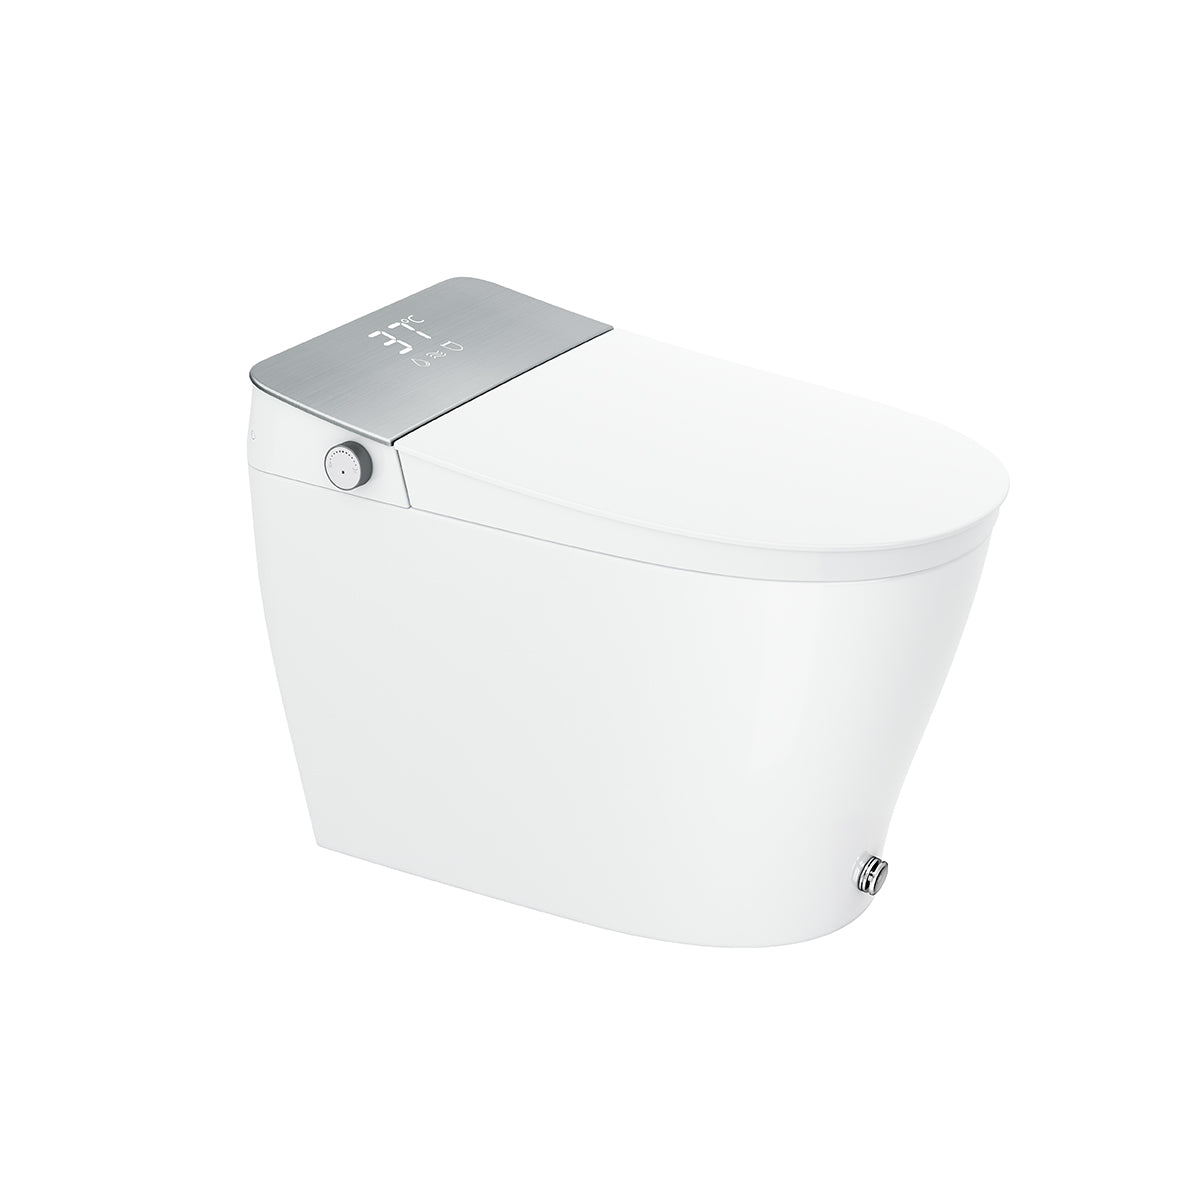 Warm Air Dryer, Smart Touch Panel, Heated Bidet Toilet Seat Elongated